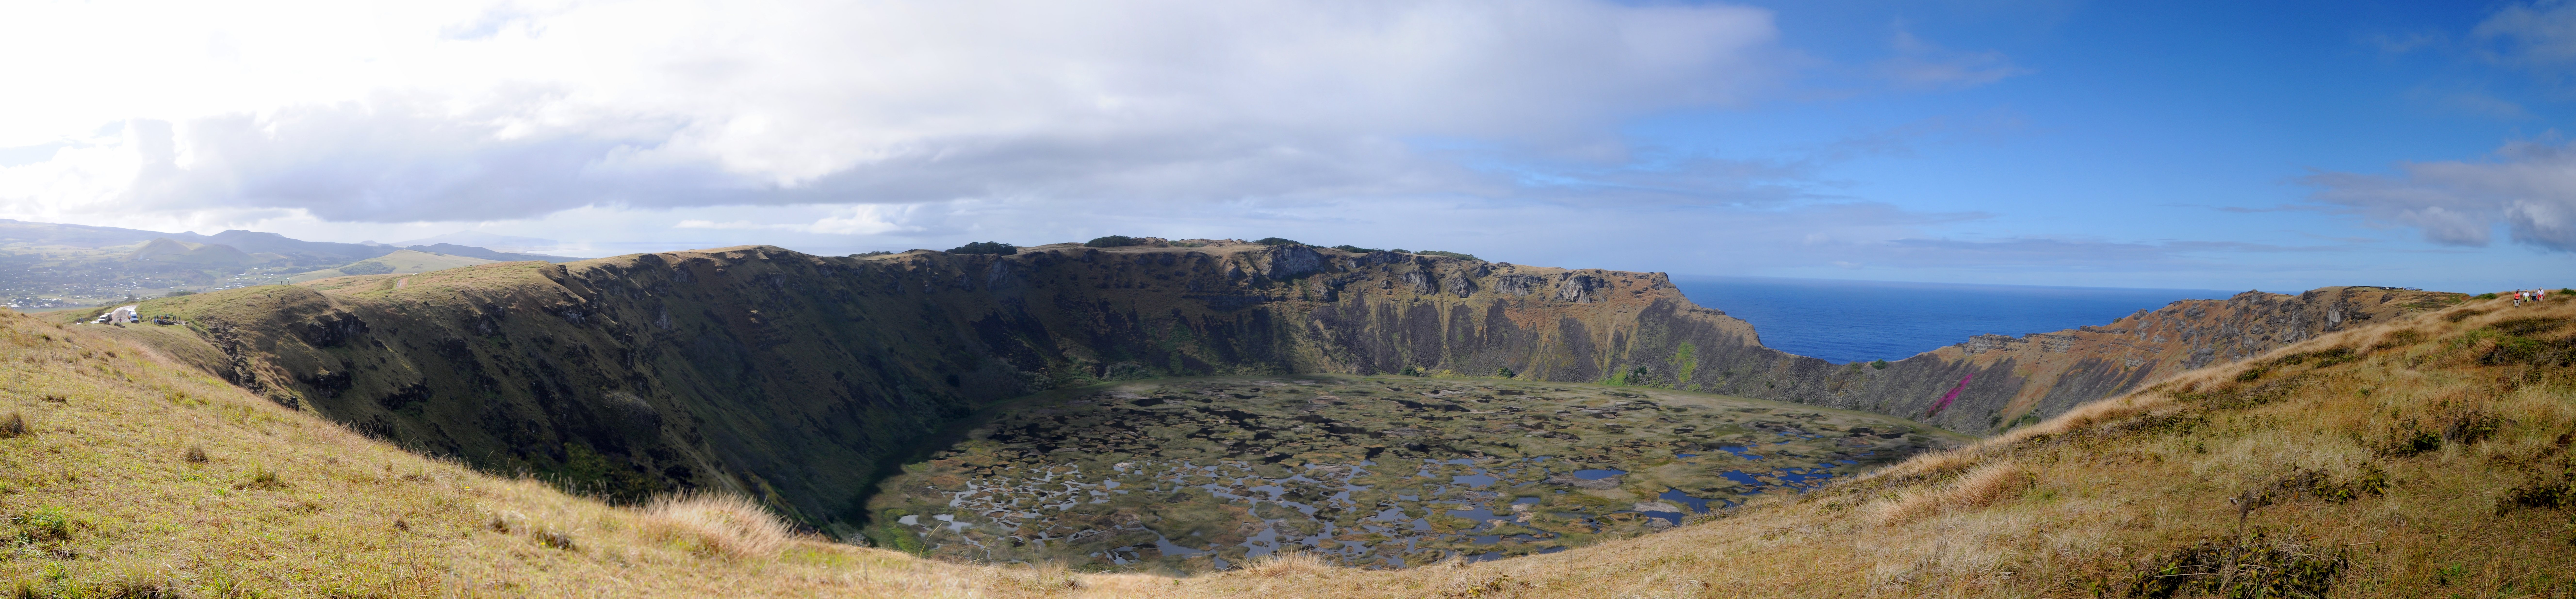 >Rano Kau Crater Panorama